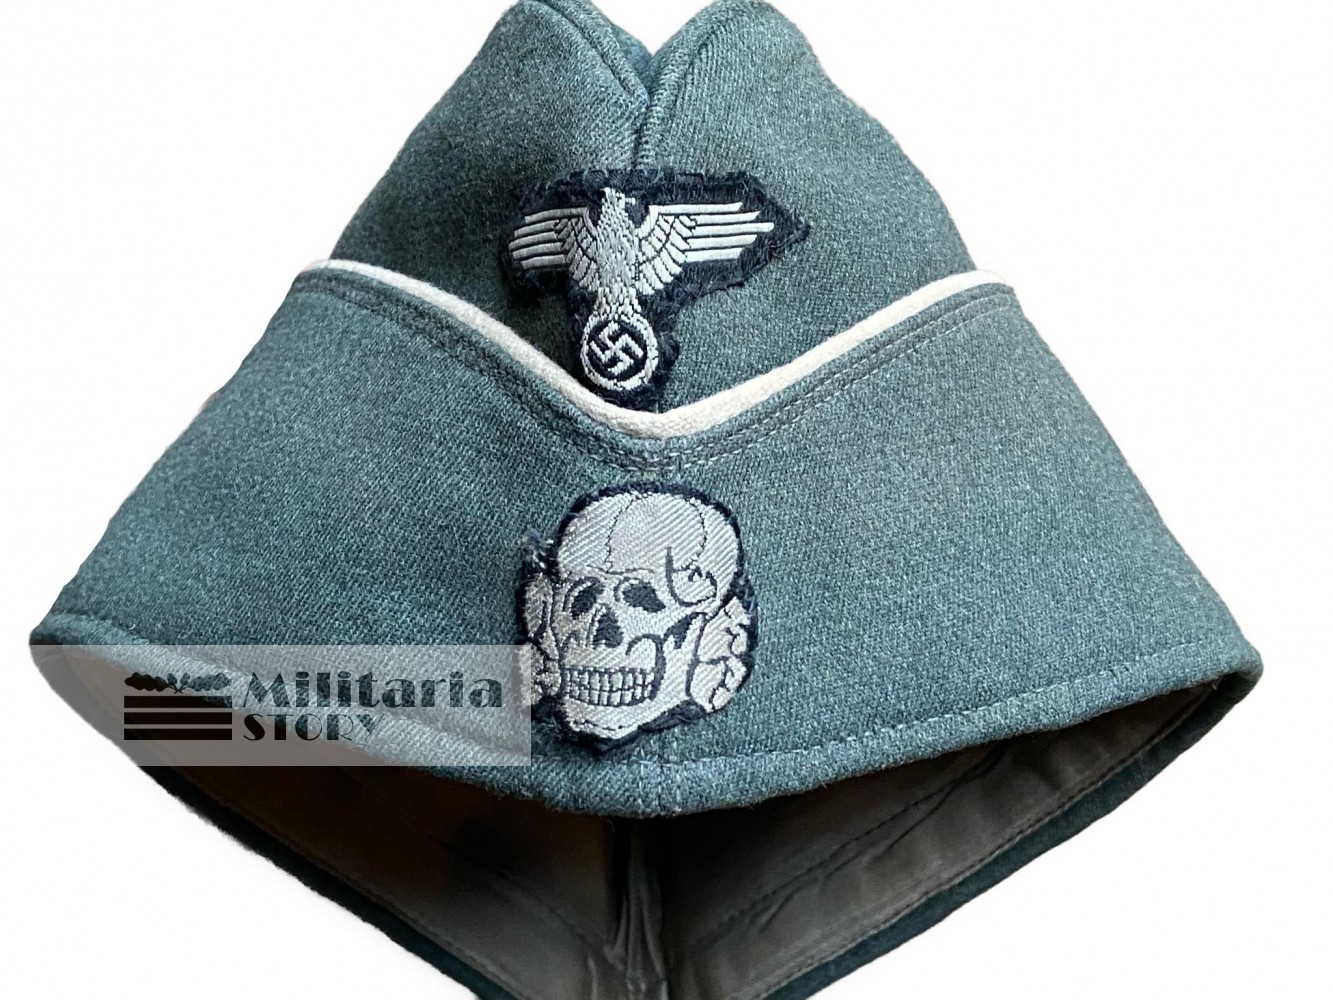 Waffen SS Officer Side Cap - Waffen SS Officer Side Cap: Vintage German Headgear